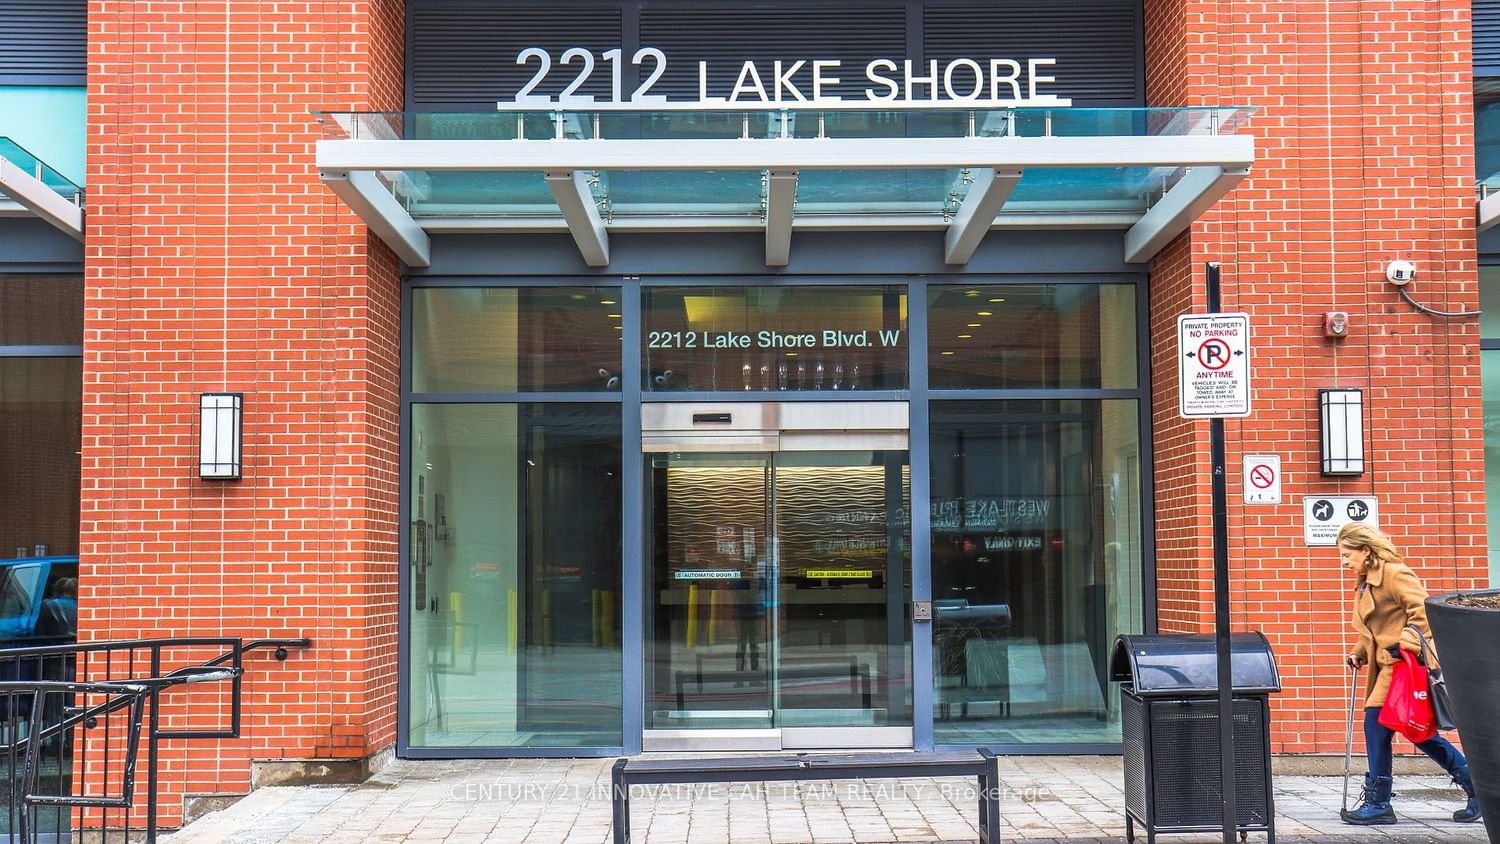 2212 Lake Shore Blvd W, unit 703 for sale - image #5